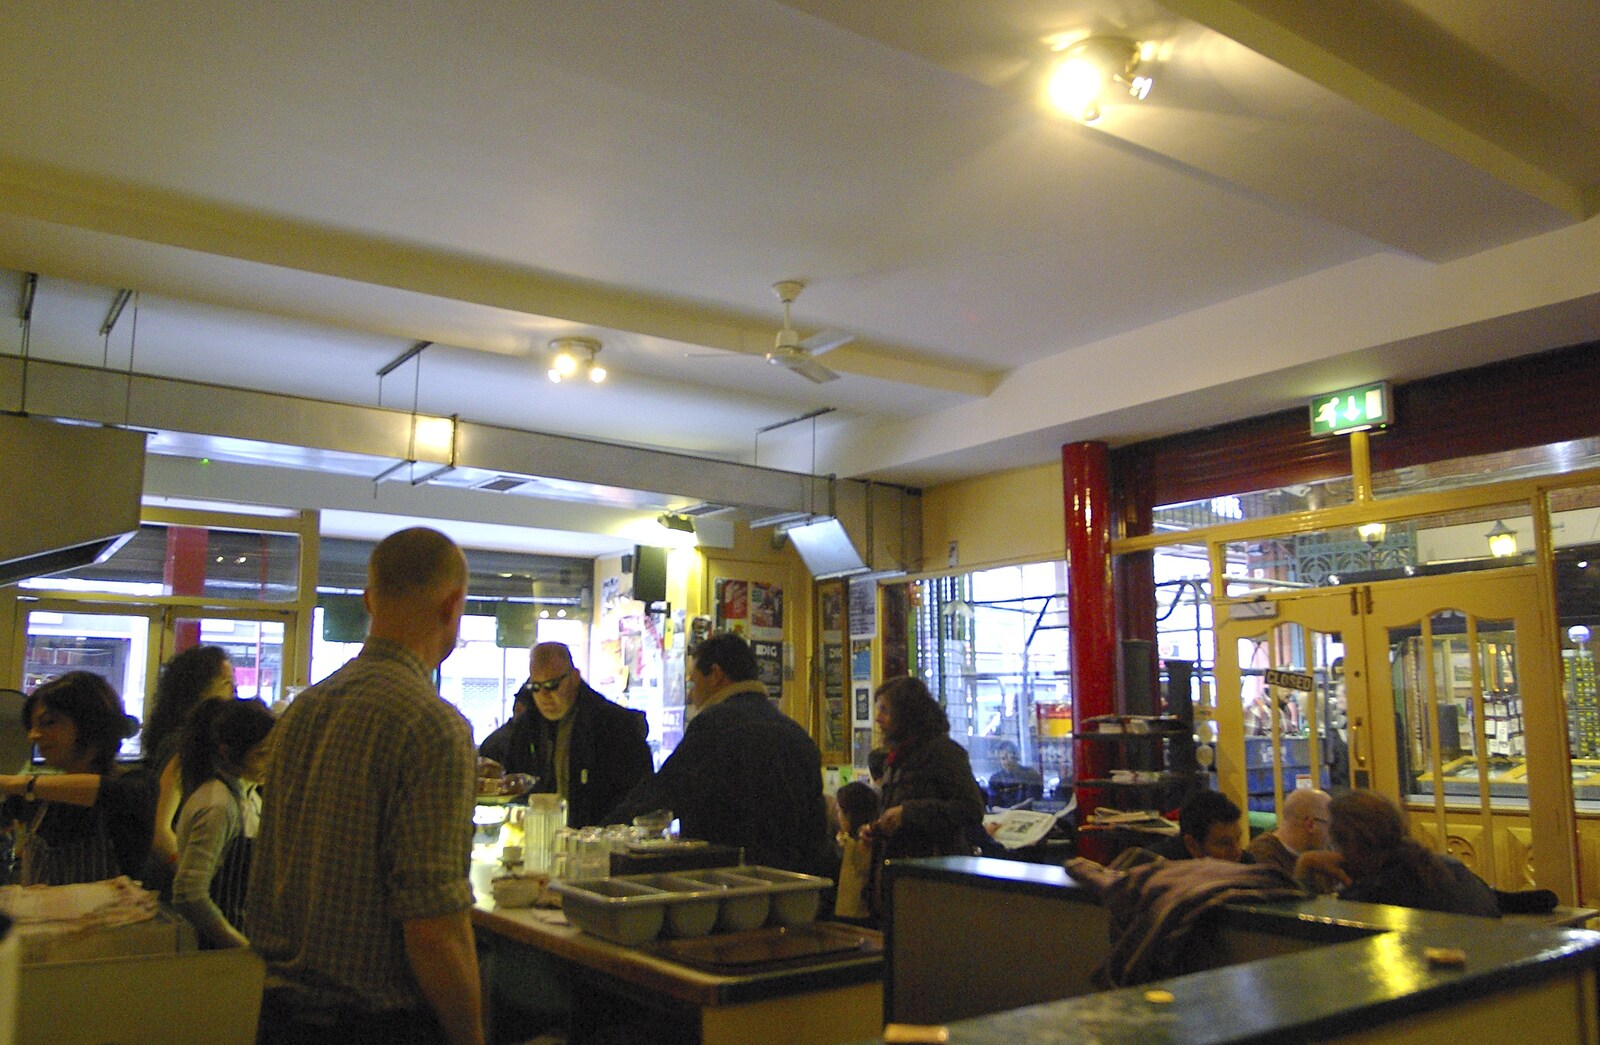 Inside Simon's Café from Easter in Dublin, Ireland - 21st March 2008